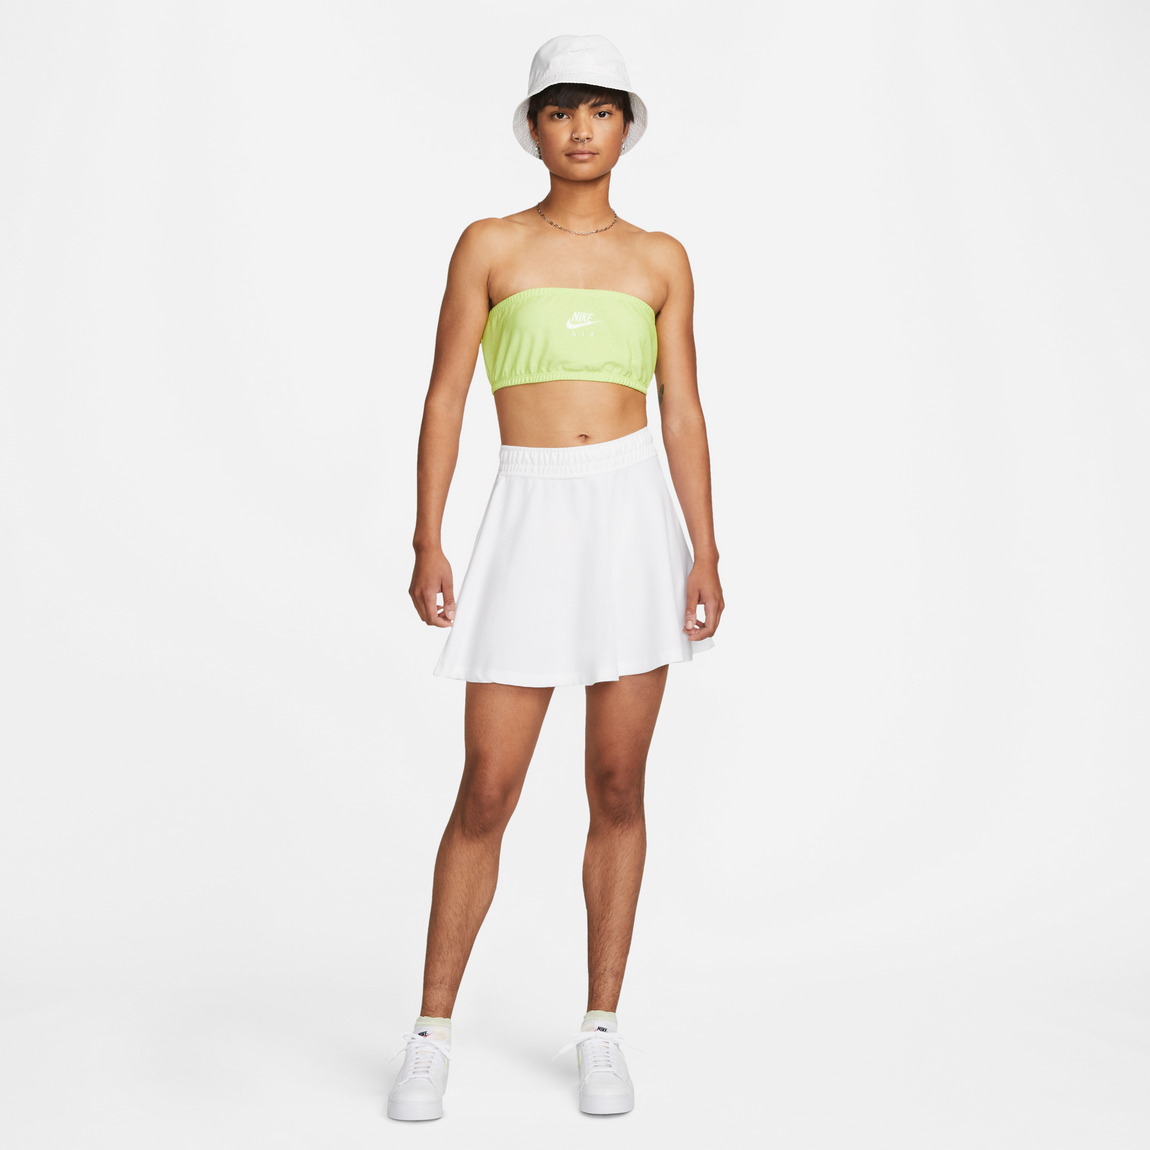 Nike Women's Pique Bandeau Top (Atomic Green/Barely Volt) - Nike Women's Pique Bandeau Top (Atomic Green/Barely Volt) - 